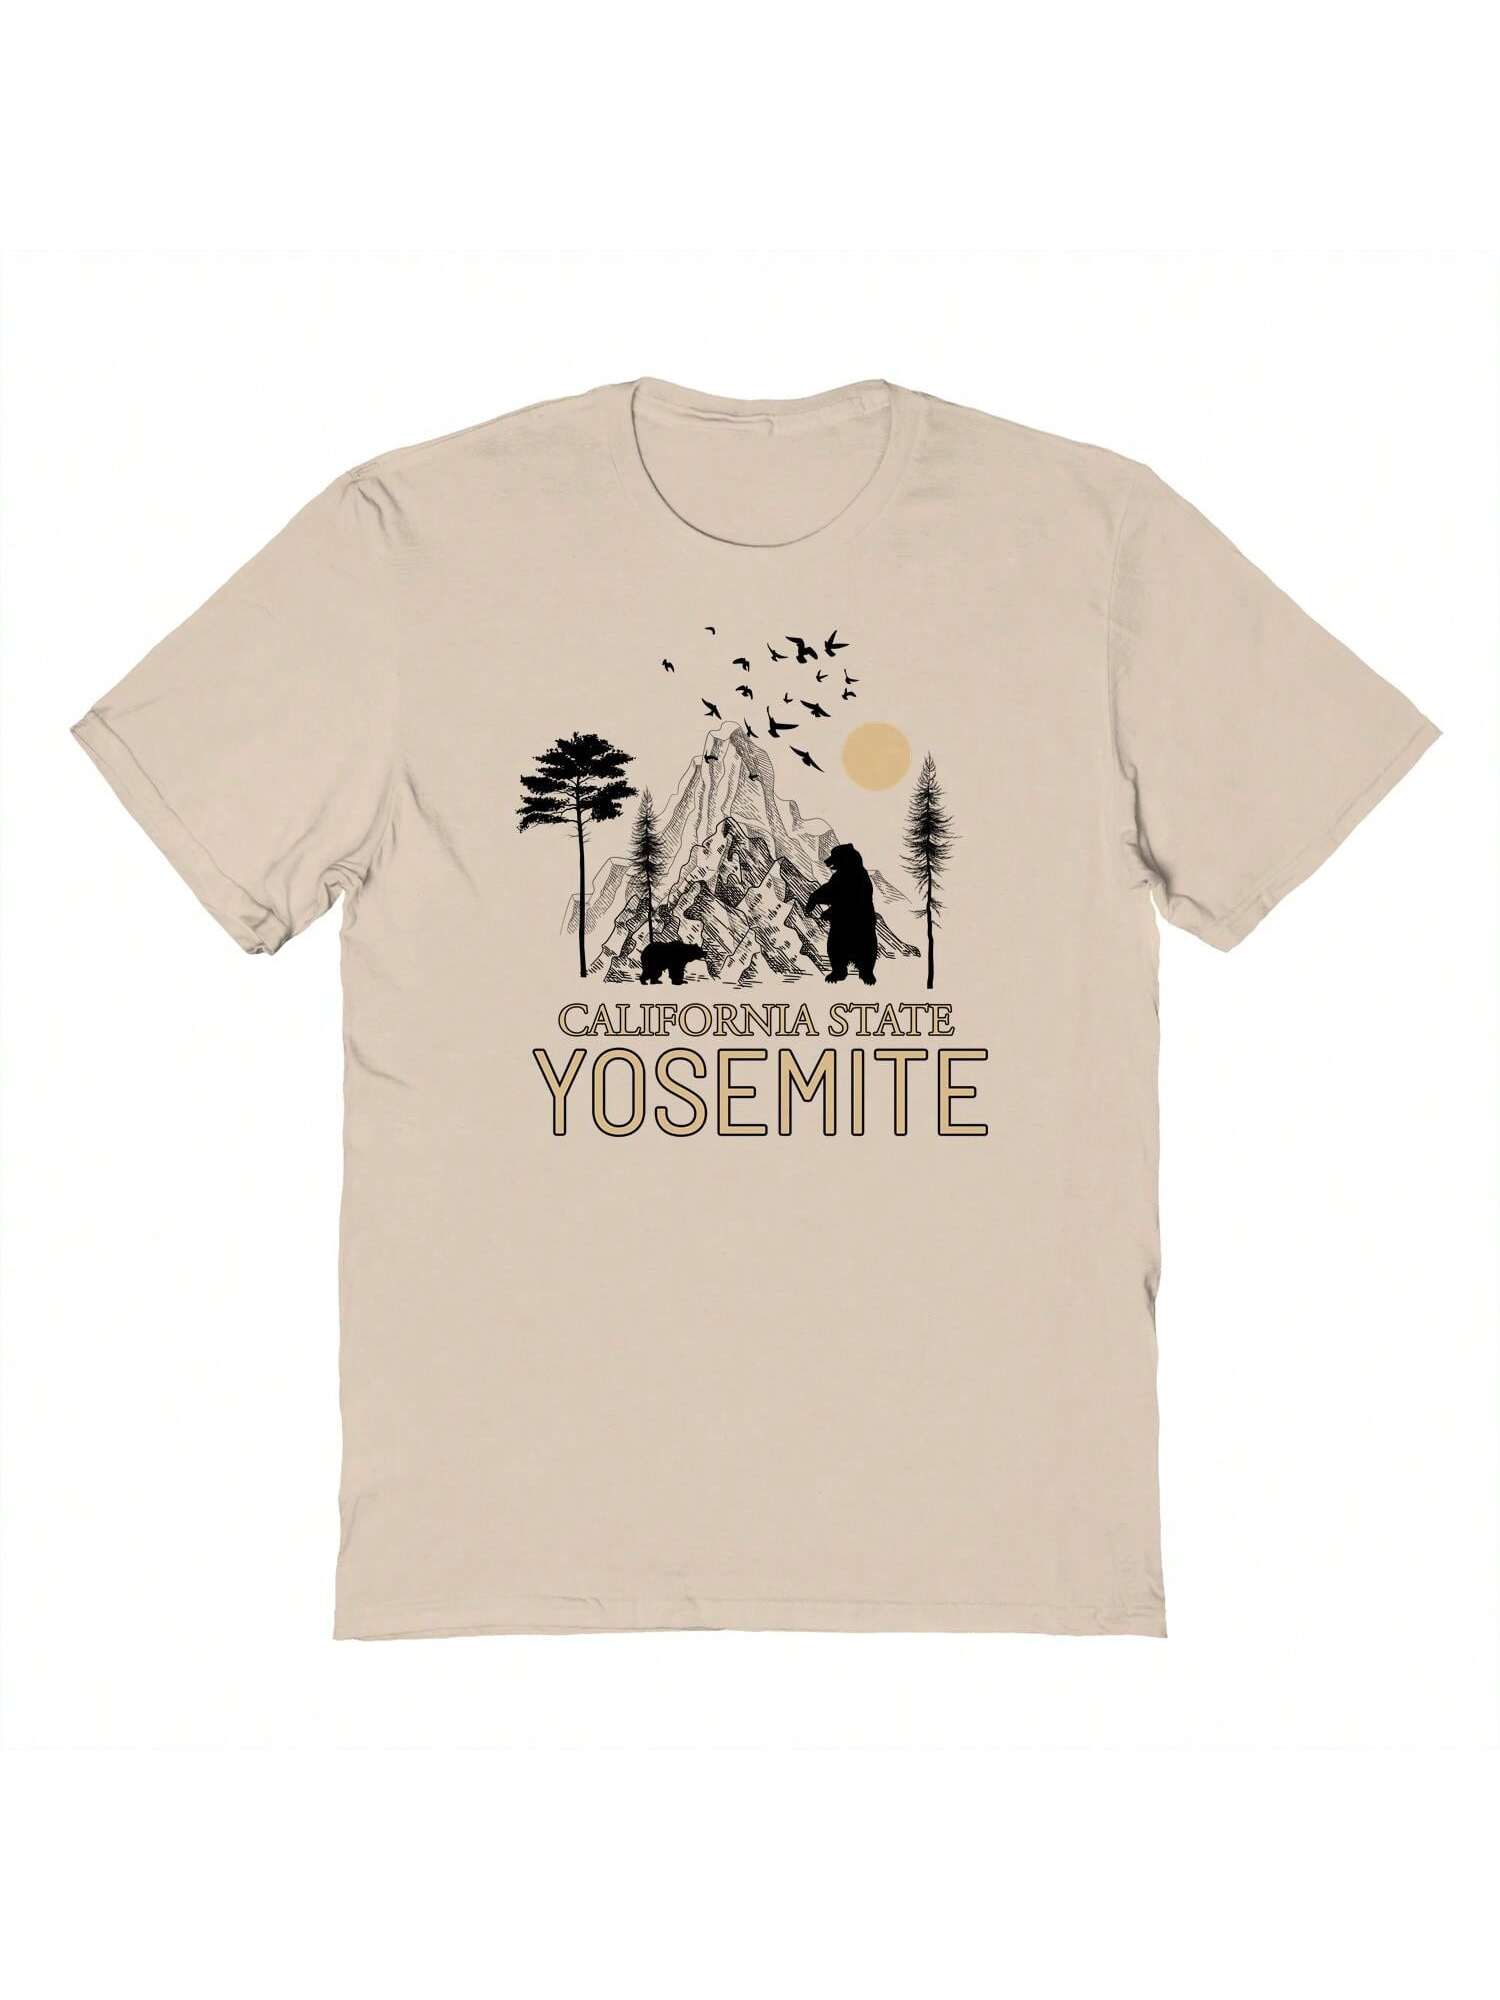 Мужская хлопковая футболка с короткими рукавами Country Parks California State Yose Mite Graphic Sand, бежевый мужская хлопковая футболка с короткими рукавами country parks california state yose mite graphic sand бежевый